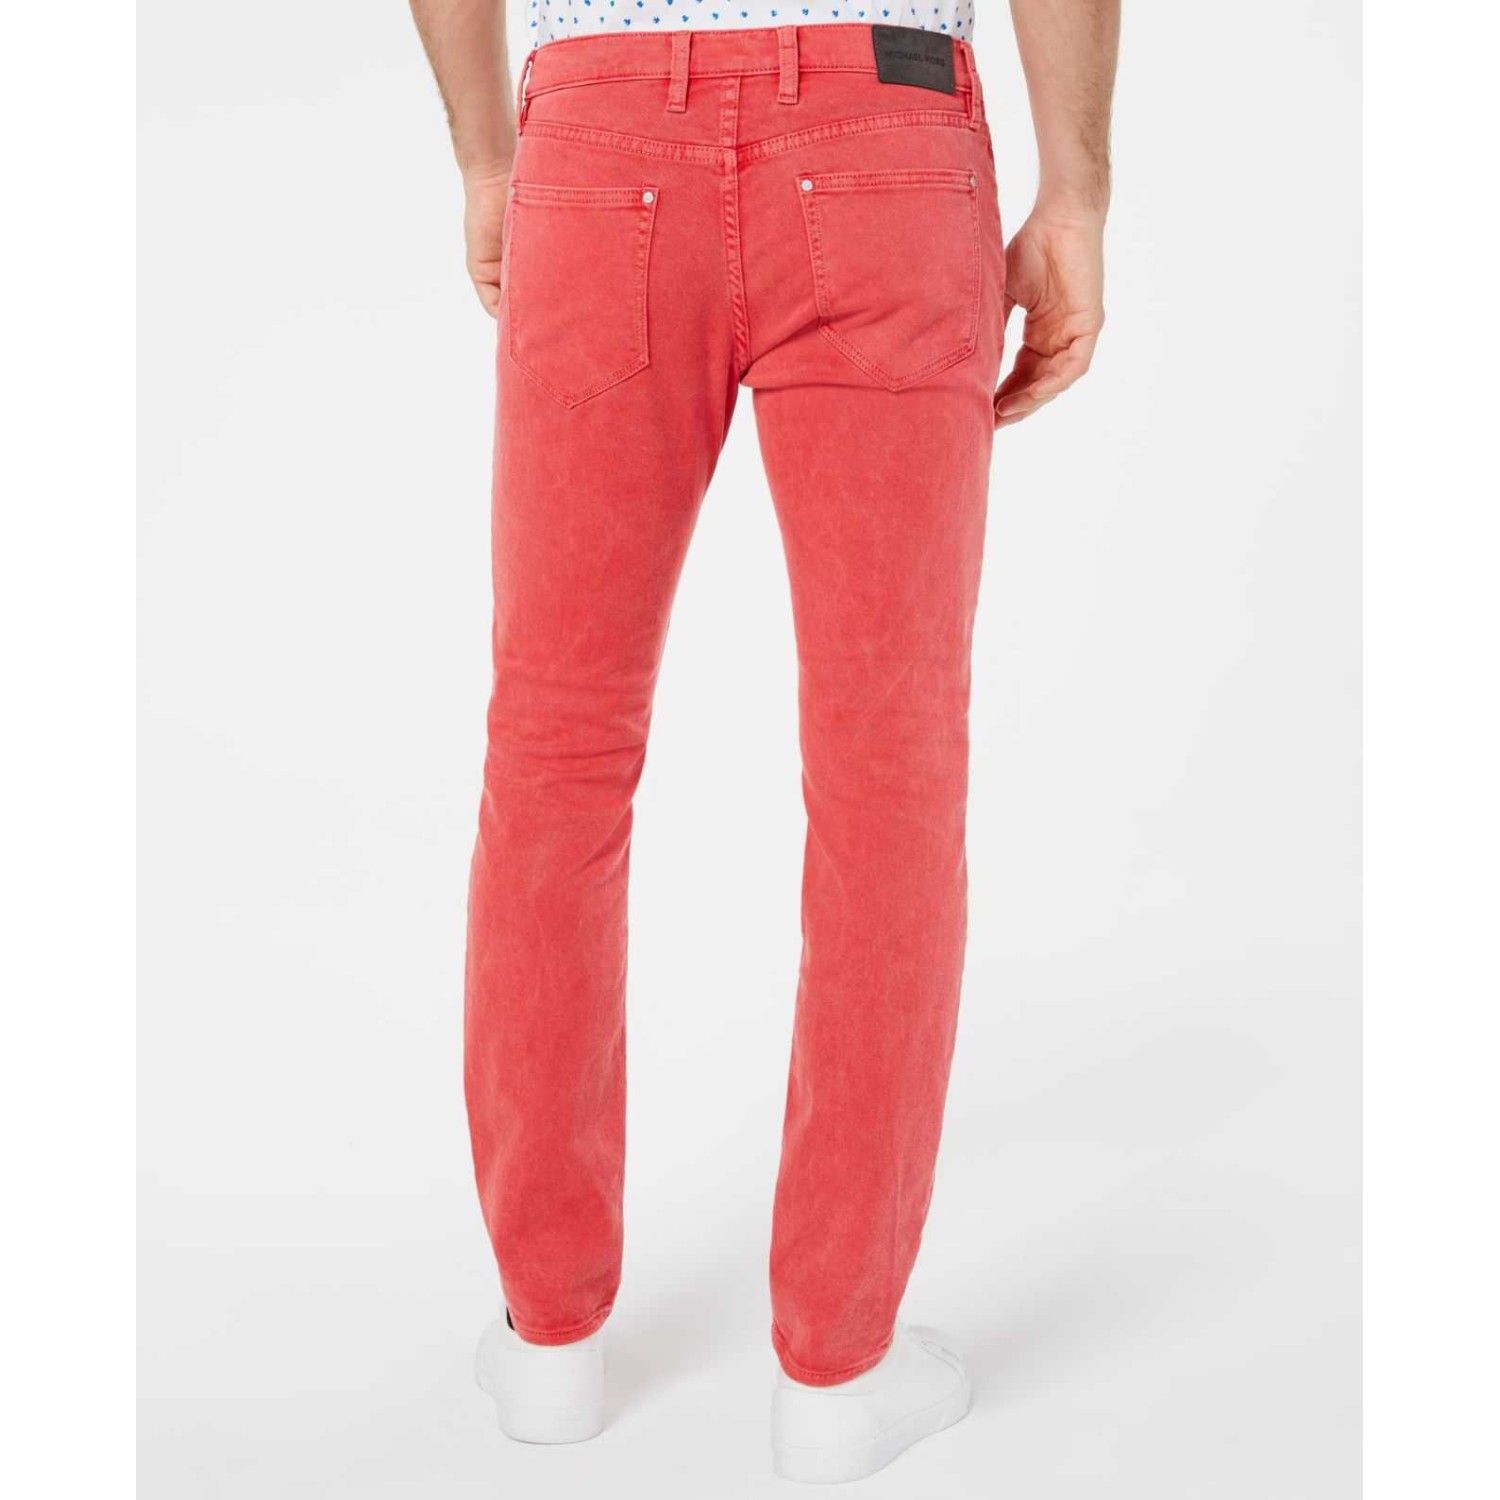 Michael Kors Men's Parker Slim-Fit Stretch Overdyed Jeans